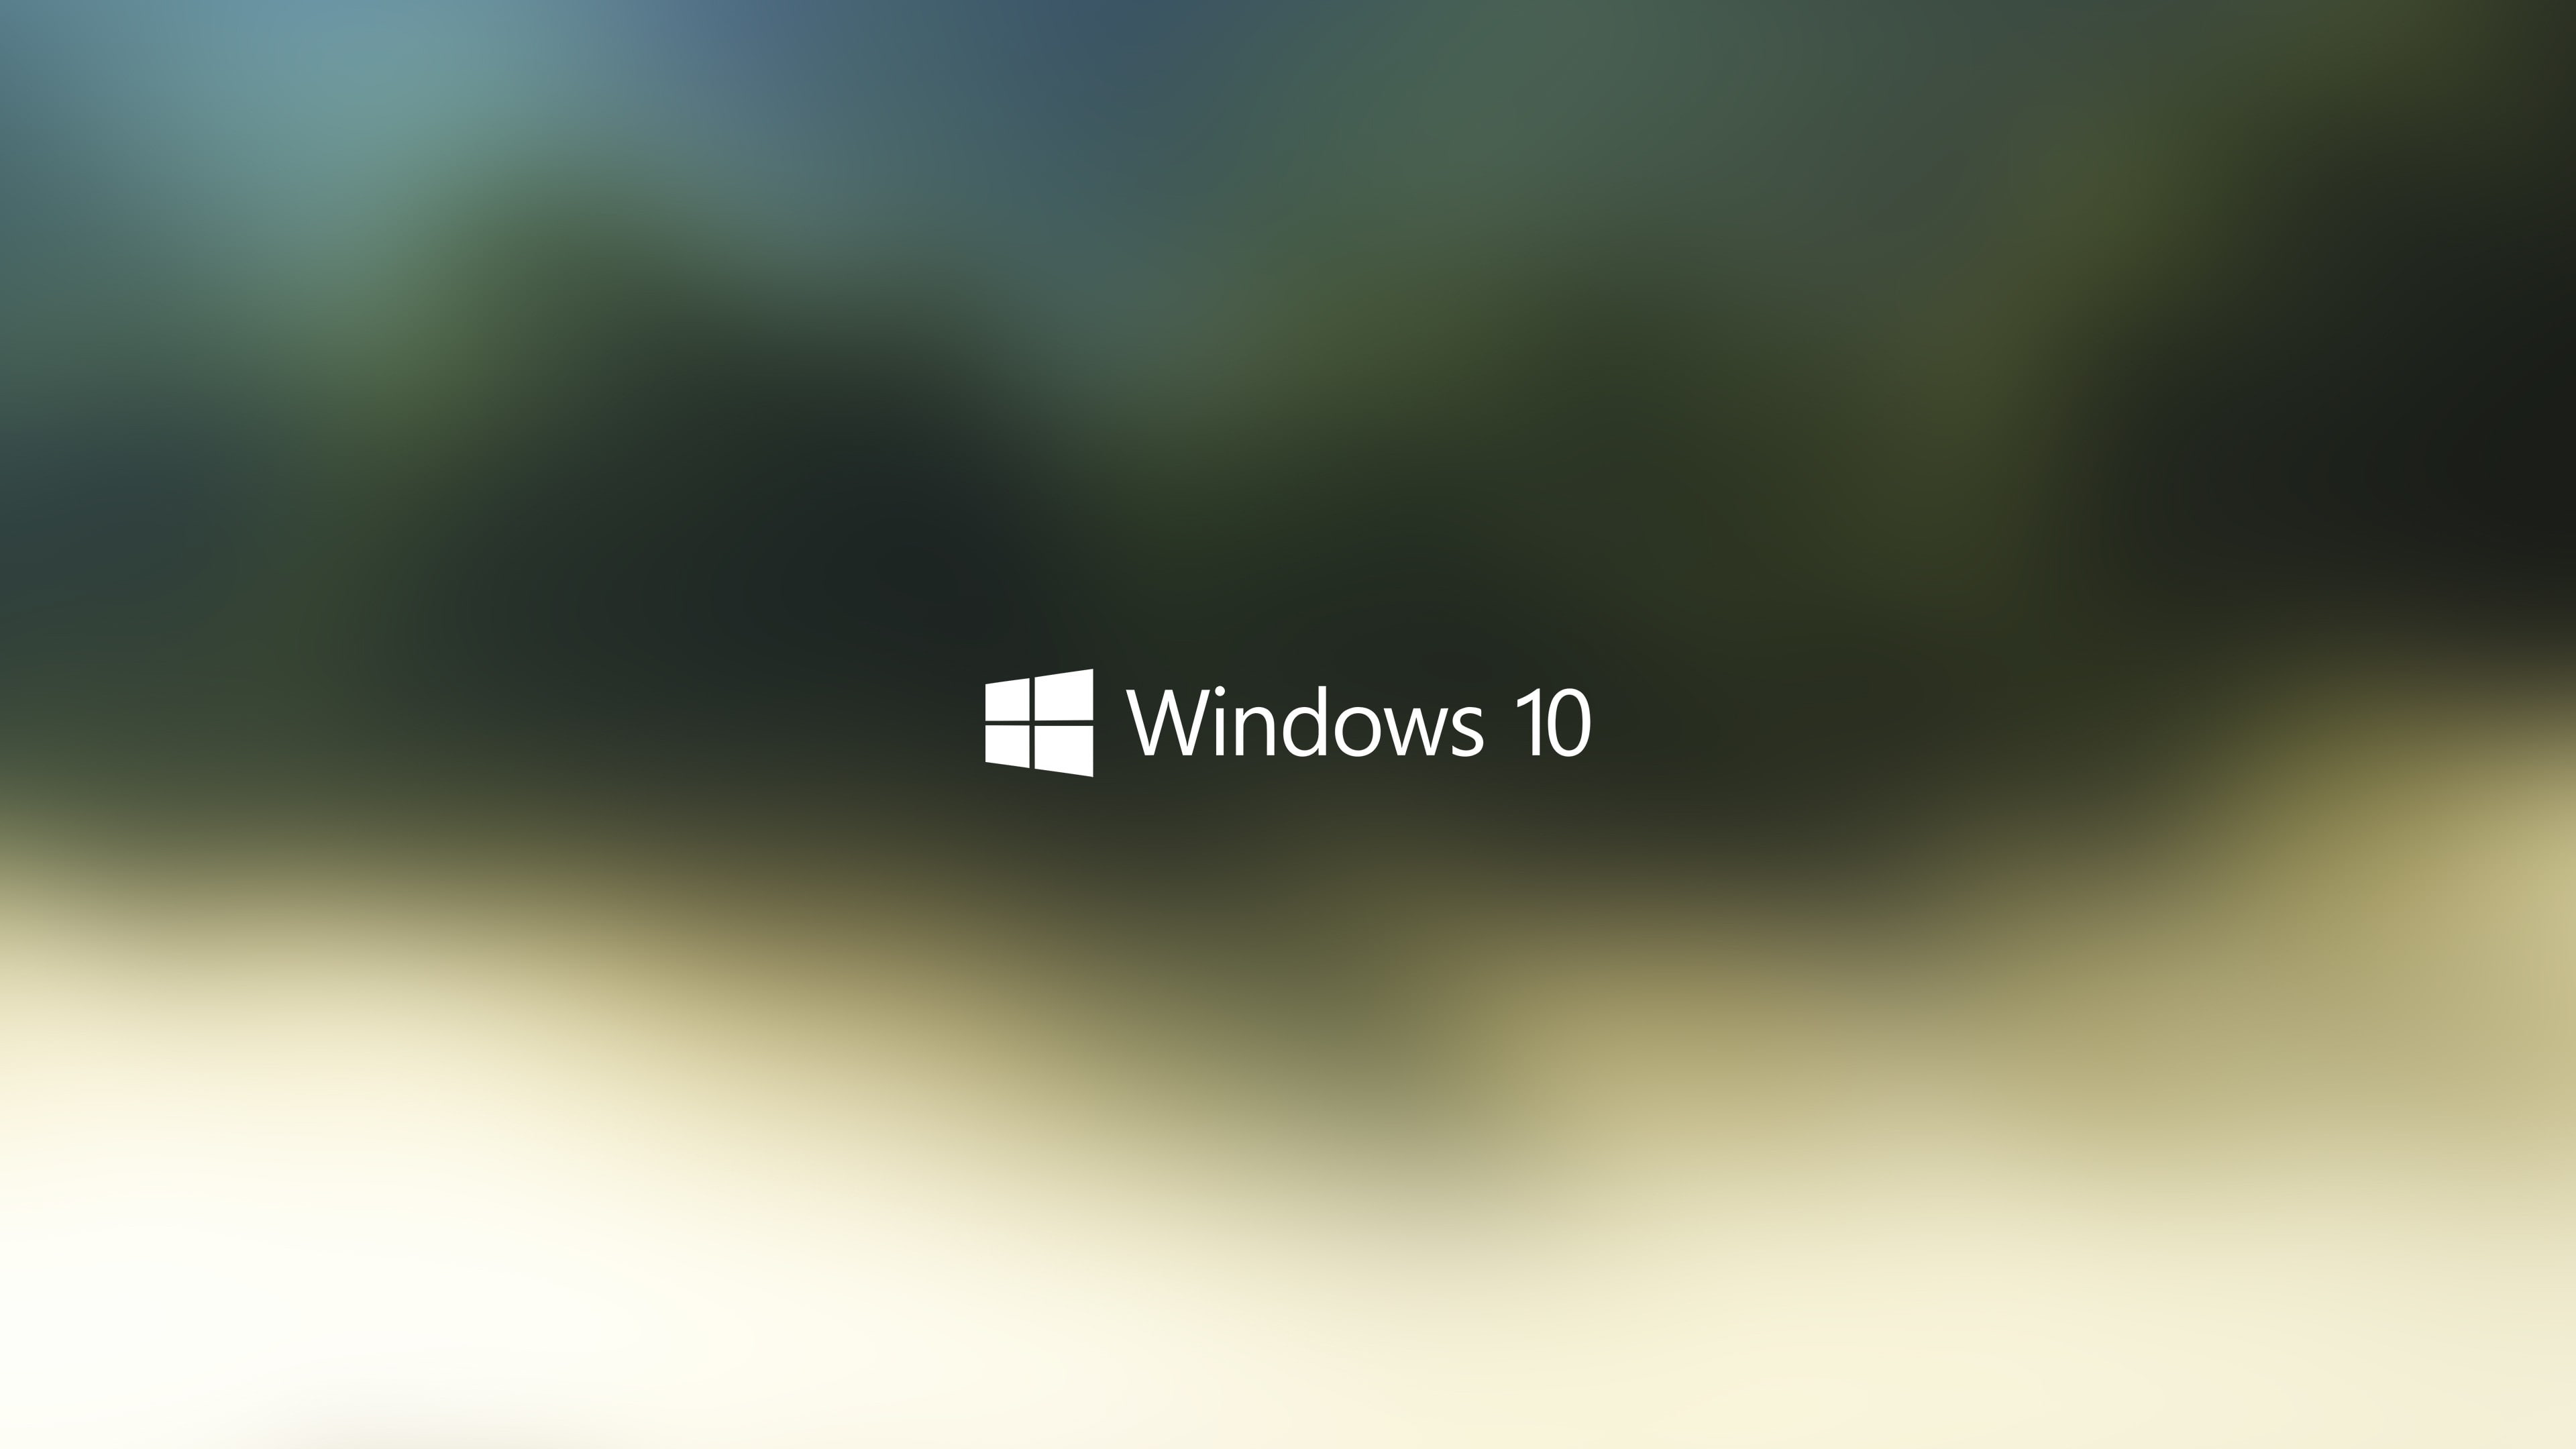 Windows 10, operating systems, minimalism, Microsoft Windows